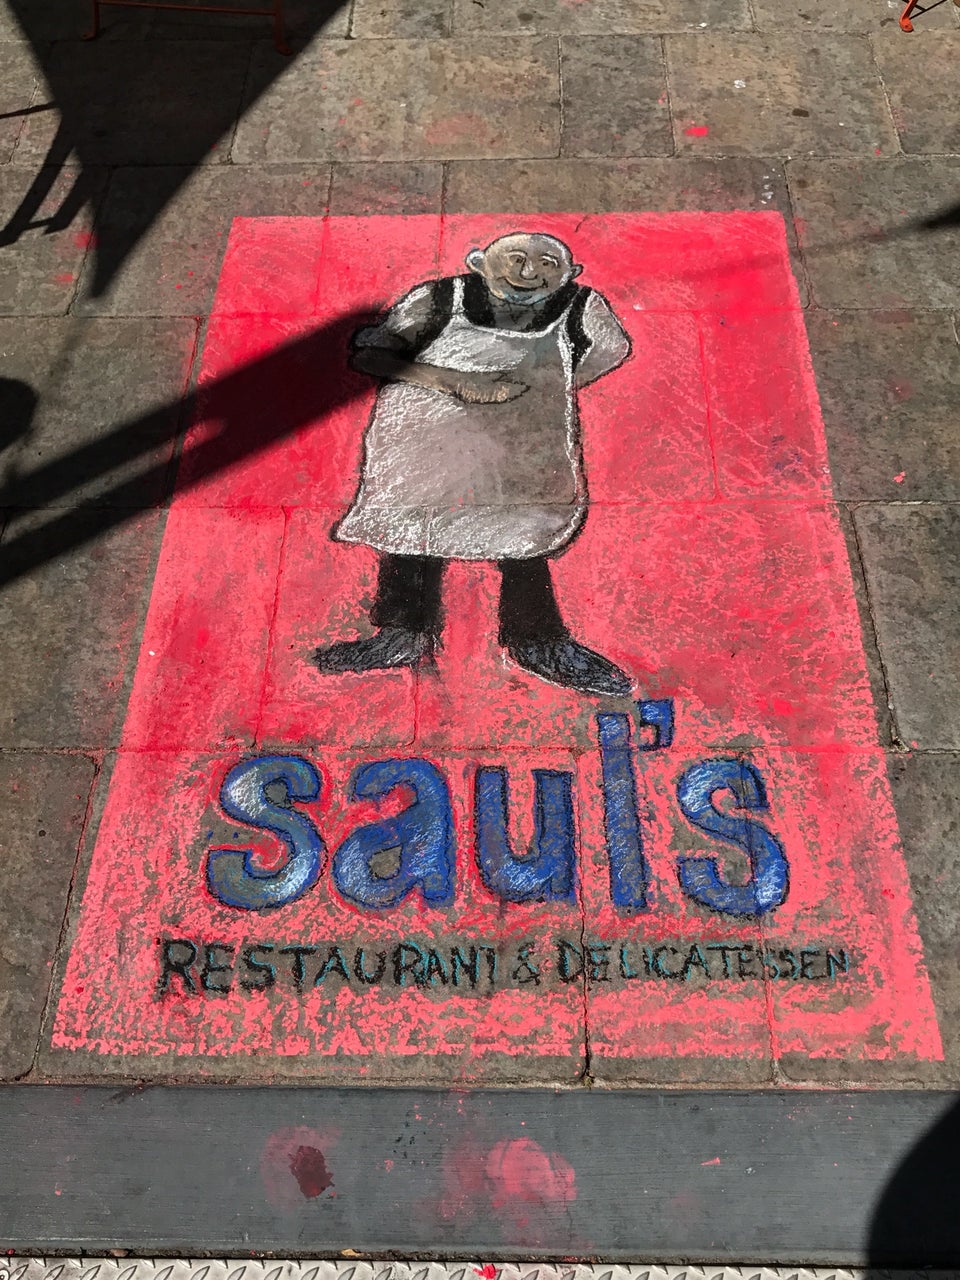 Photo of Saul's Restaurant & Delicatessen